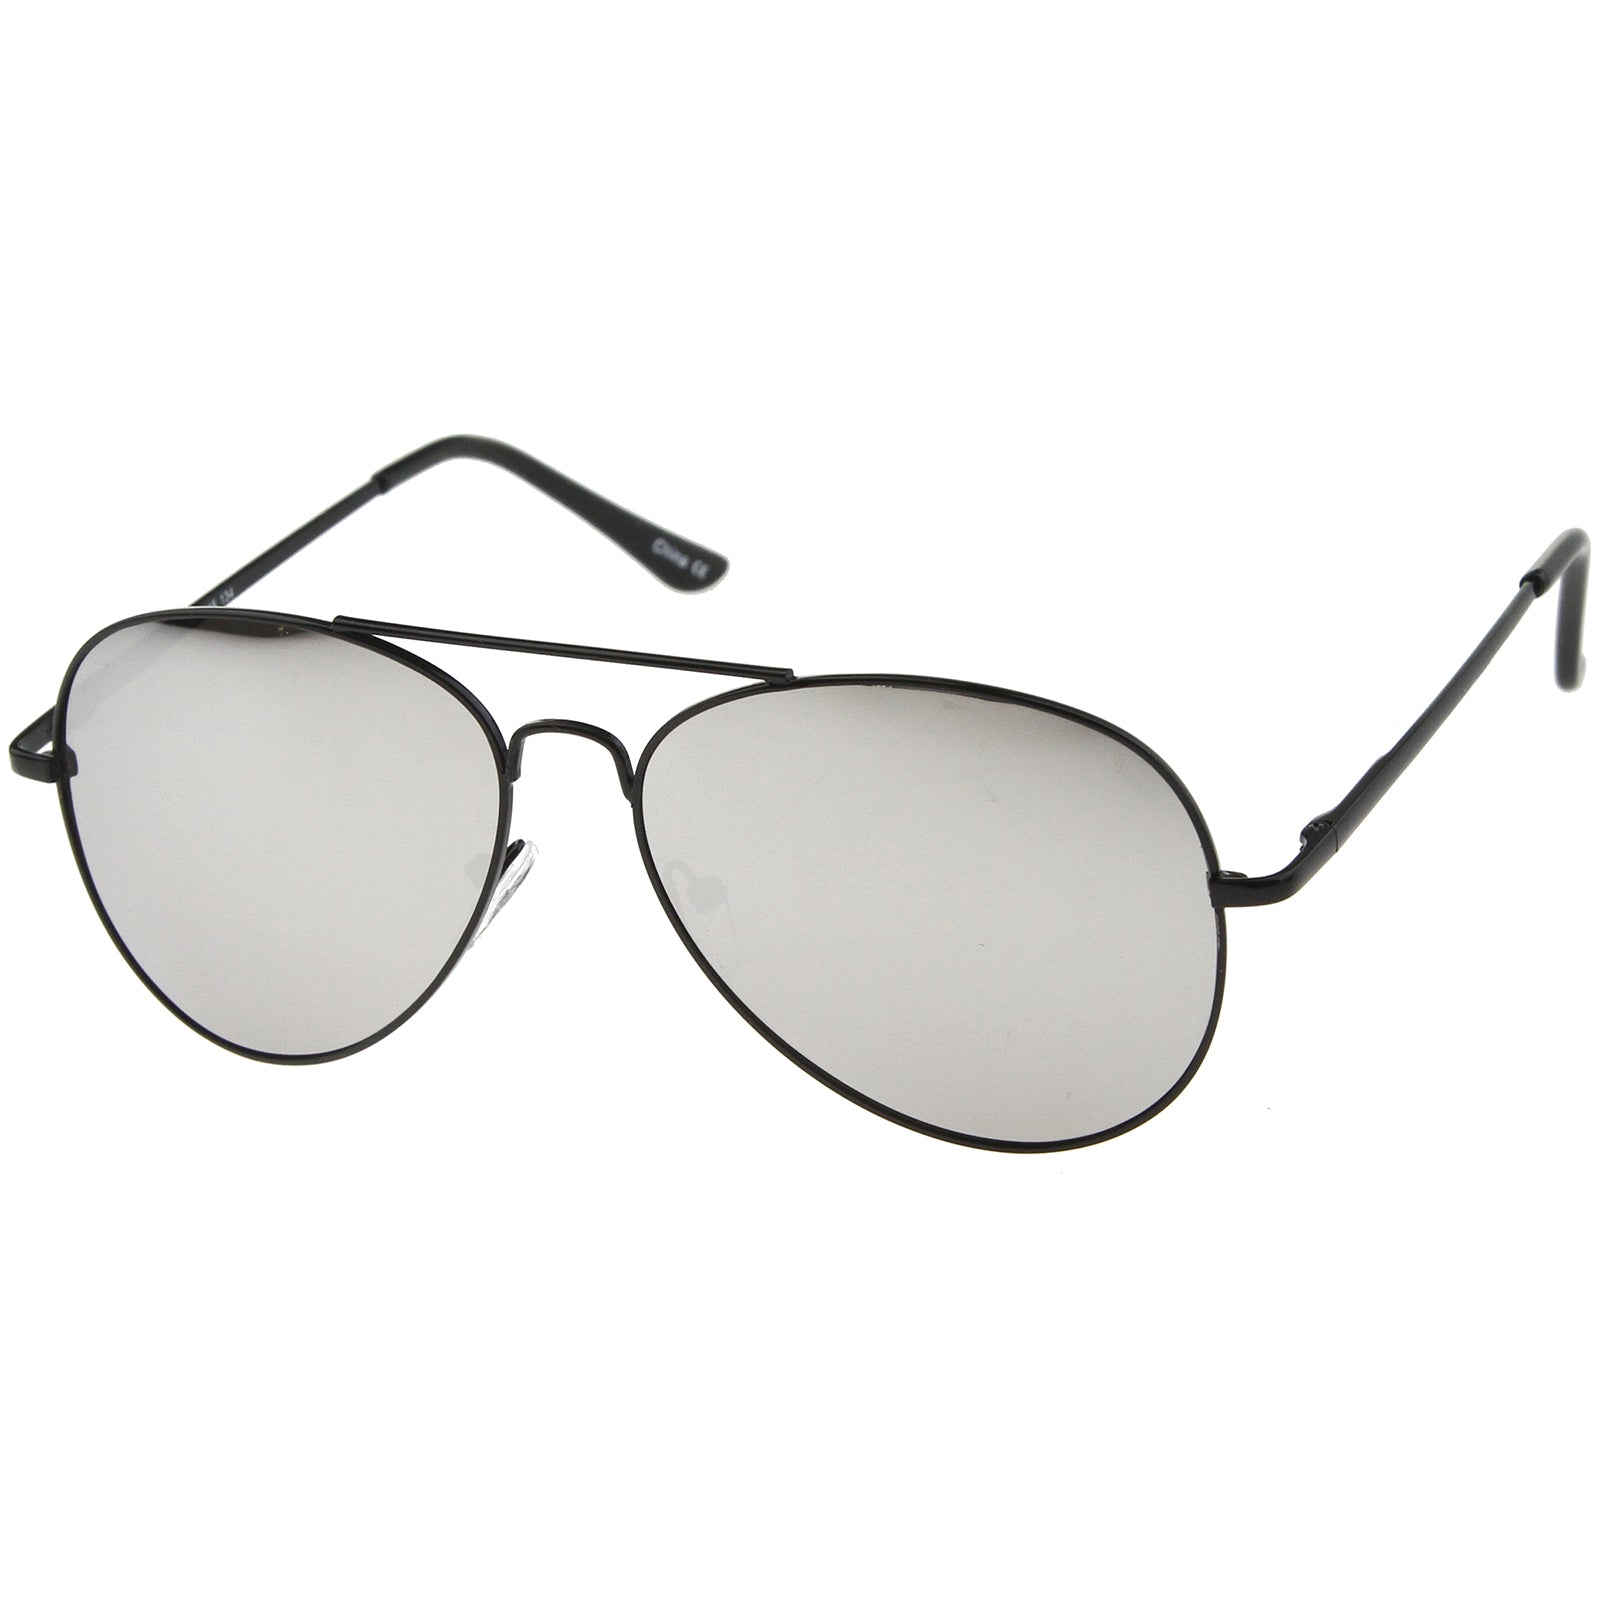 zeroUV - Classic Metal Frame Spring Hinges Color Mirror Lens Aviator Sunglasses 56mm (Black / Silver Mirror)